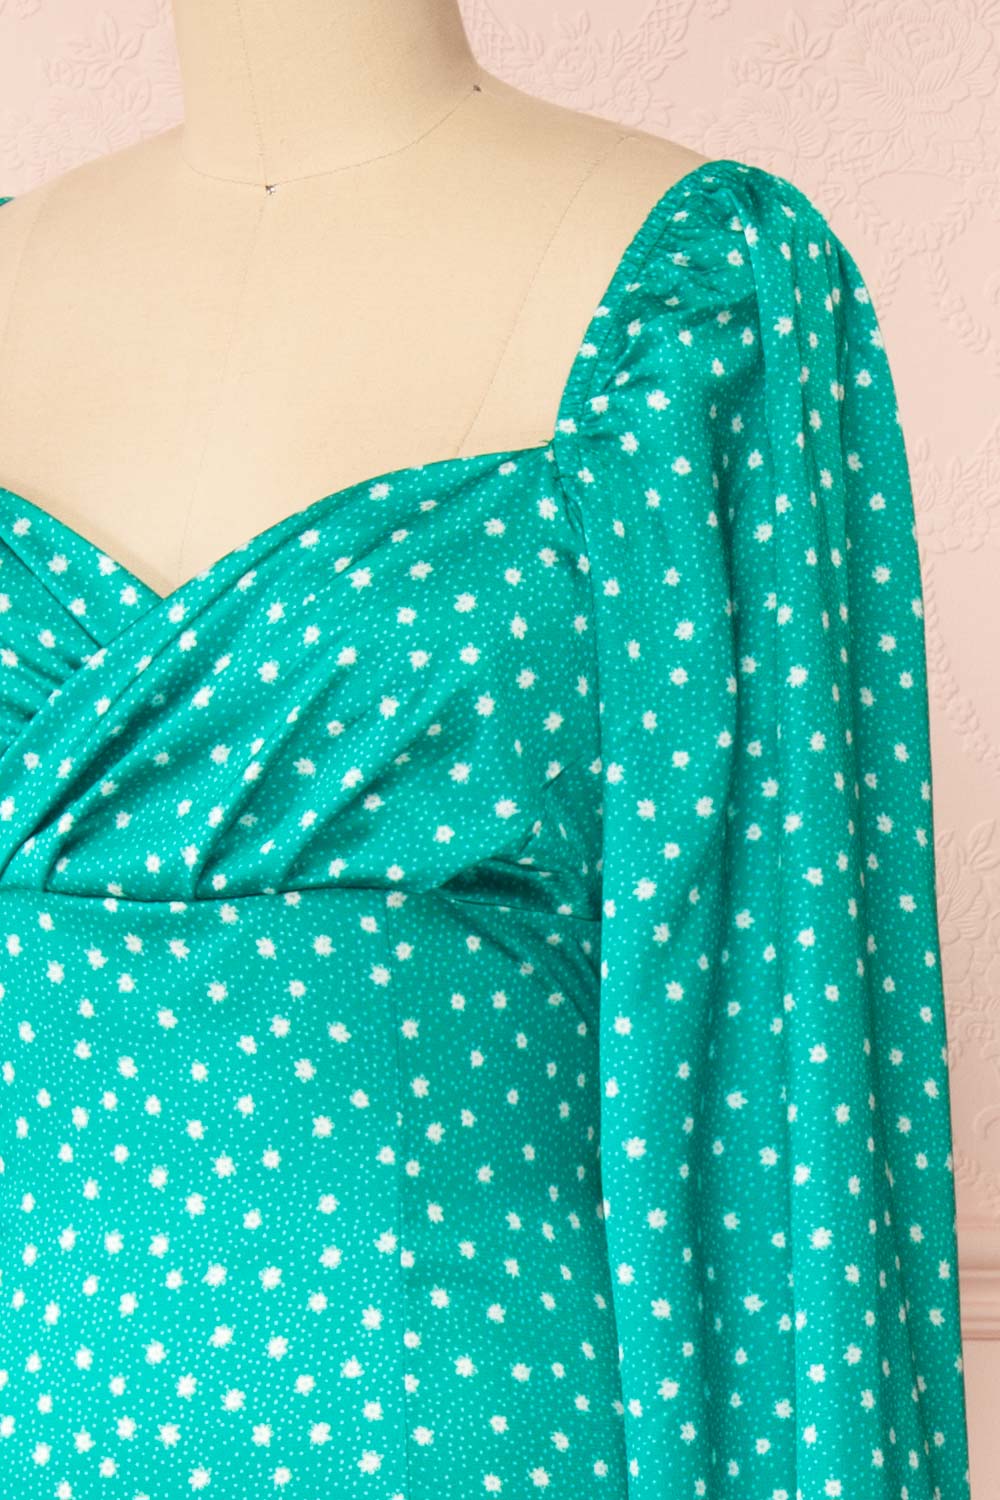 Pierette Green Patterned Maxi Dress w/ Slit | Boutique 1861 side close-up